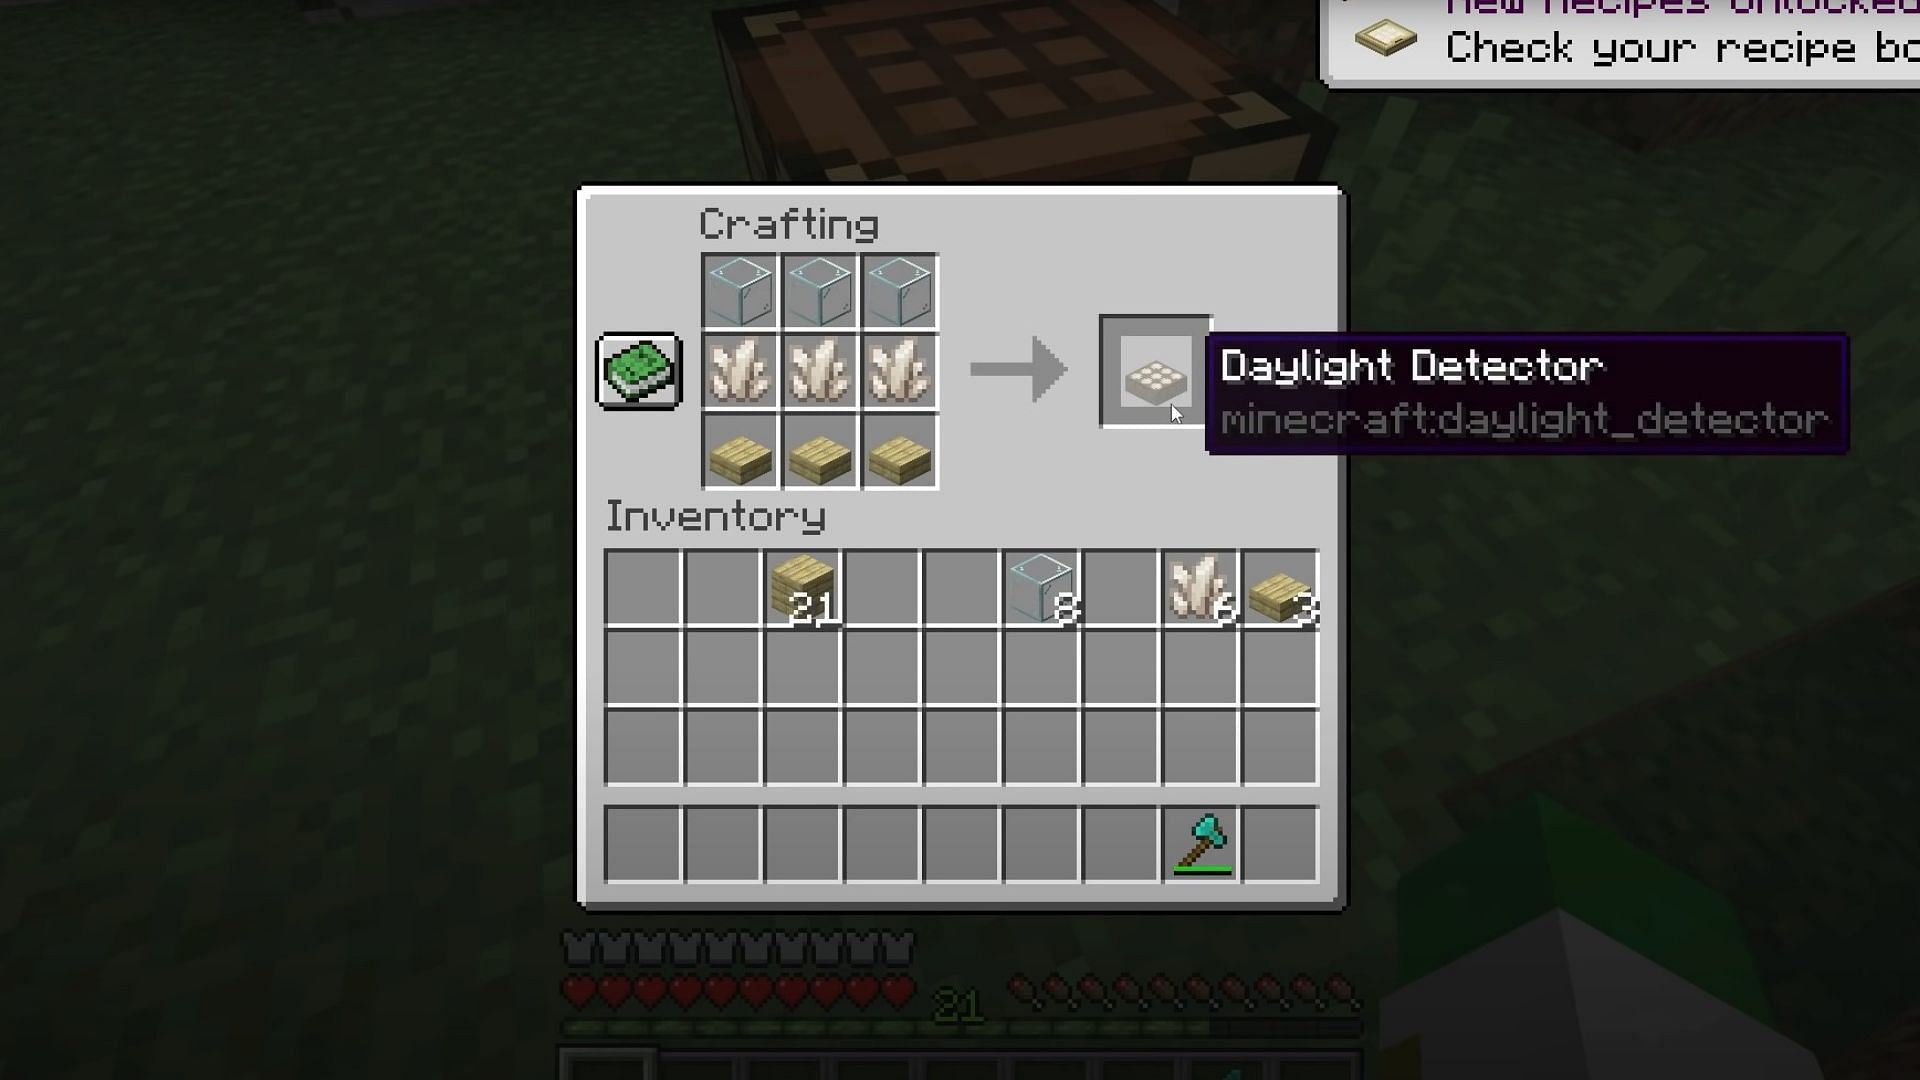 Daylight Detector in Minecraft (Image via Mojang Studios)